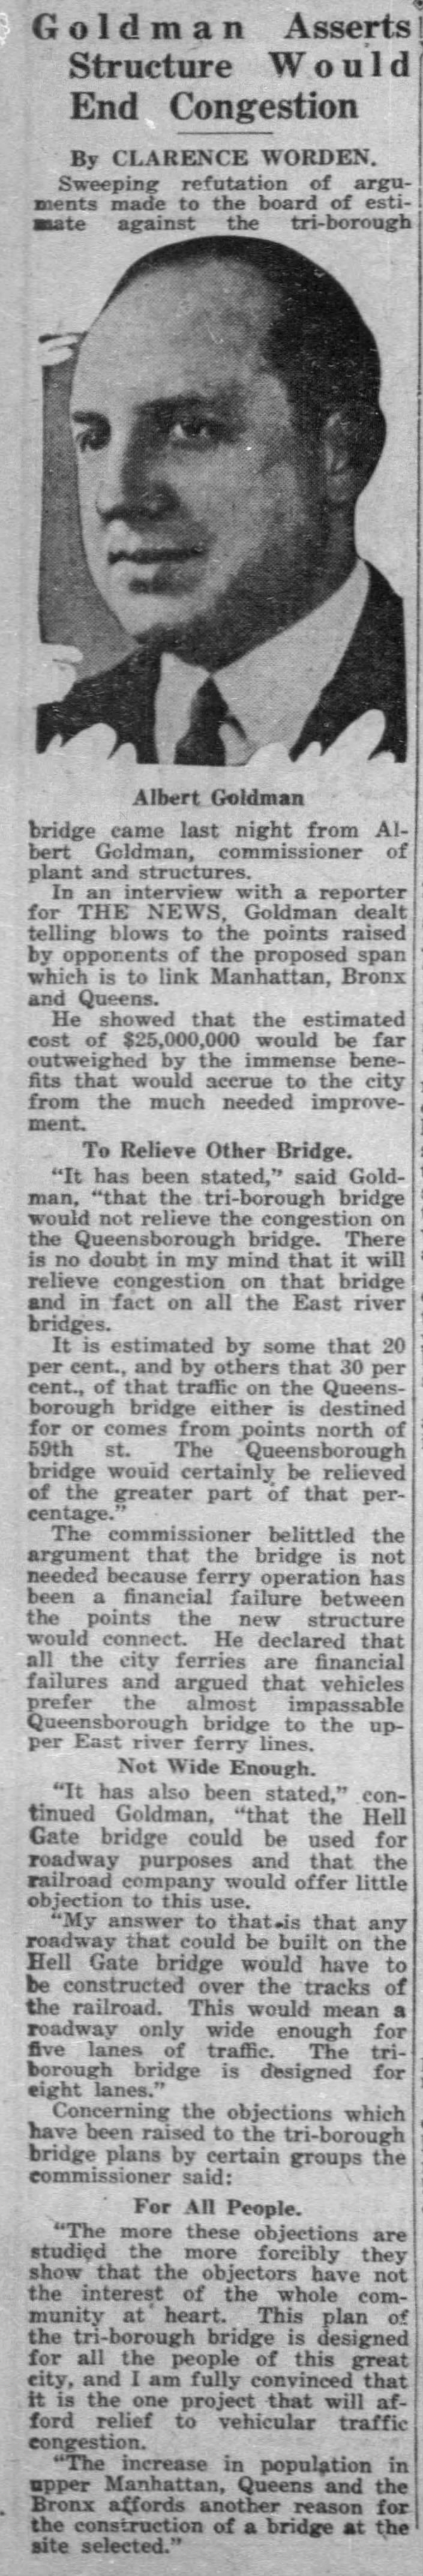 Triborough Bridge Objections Refuted